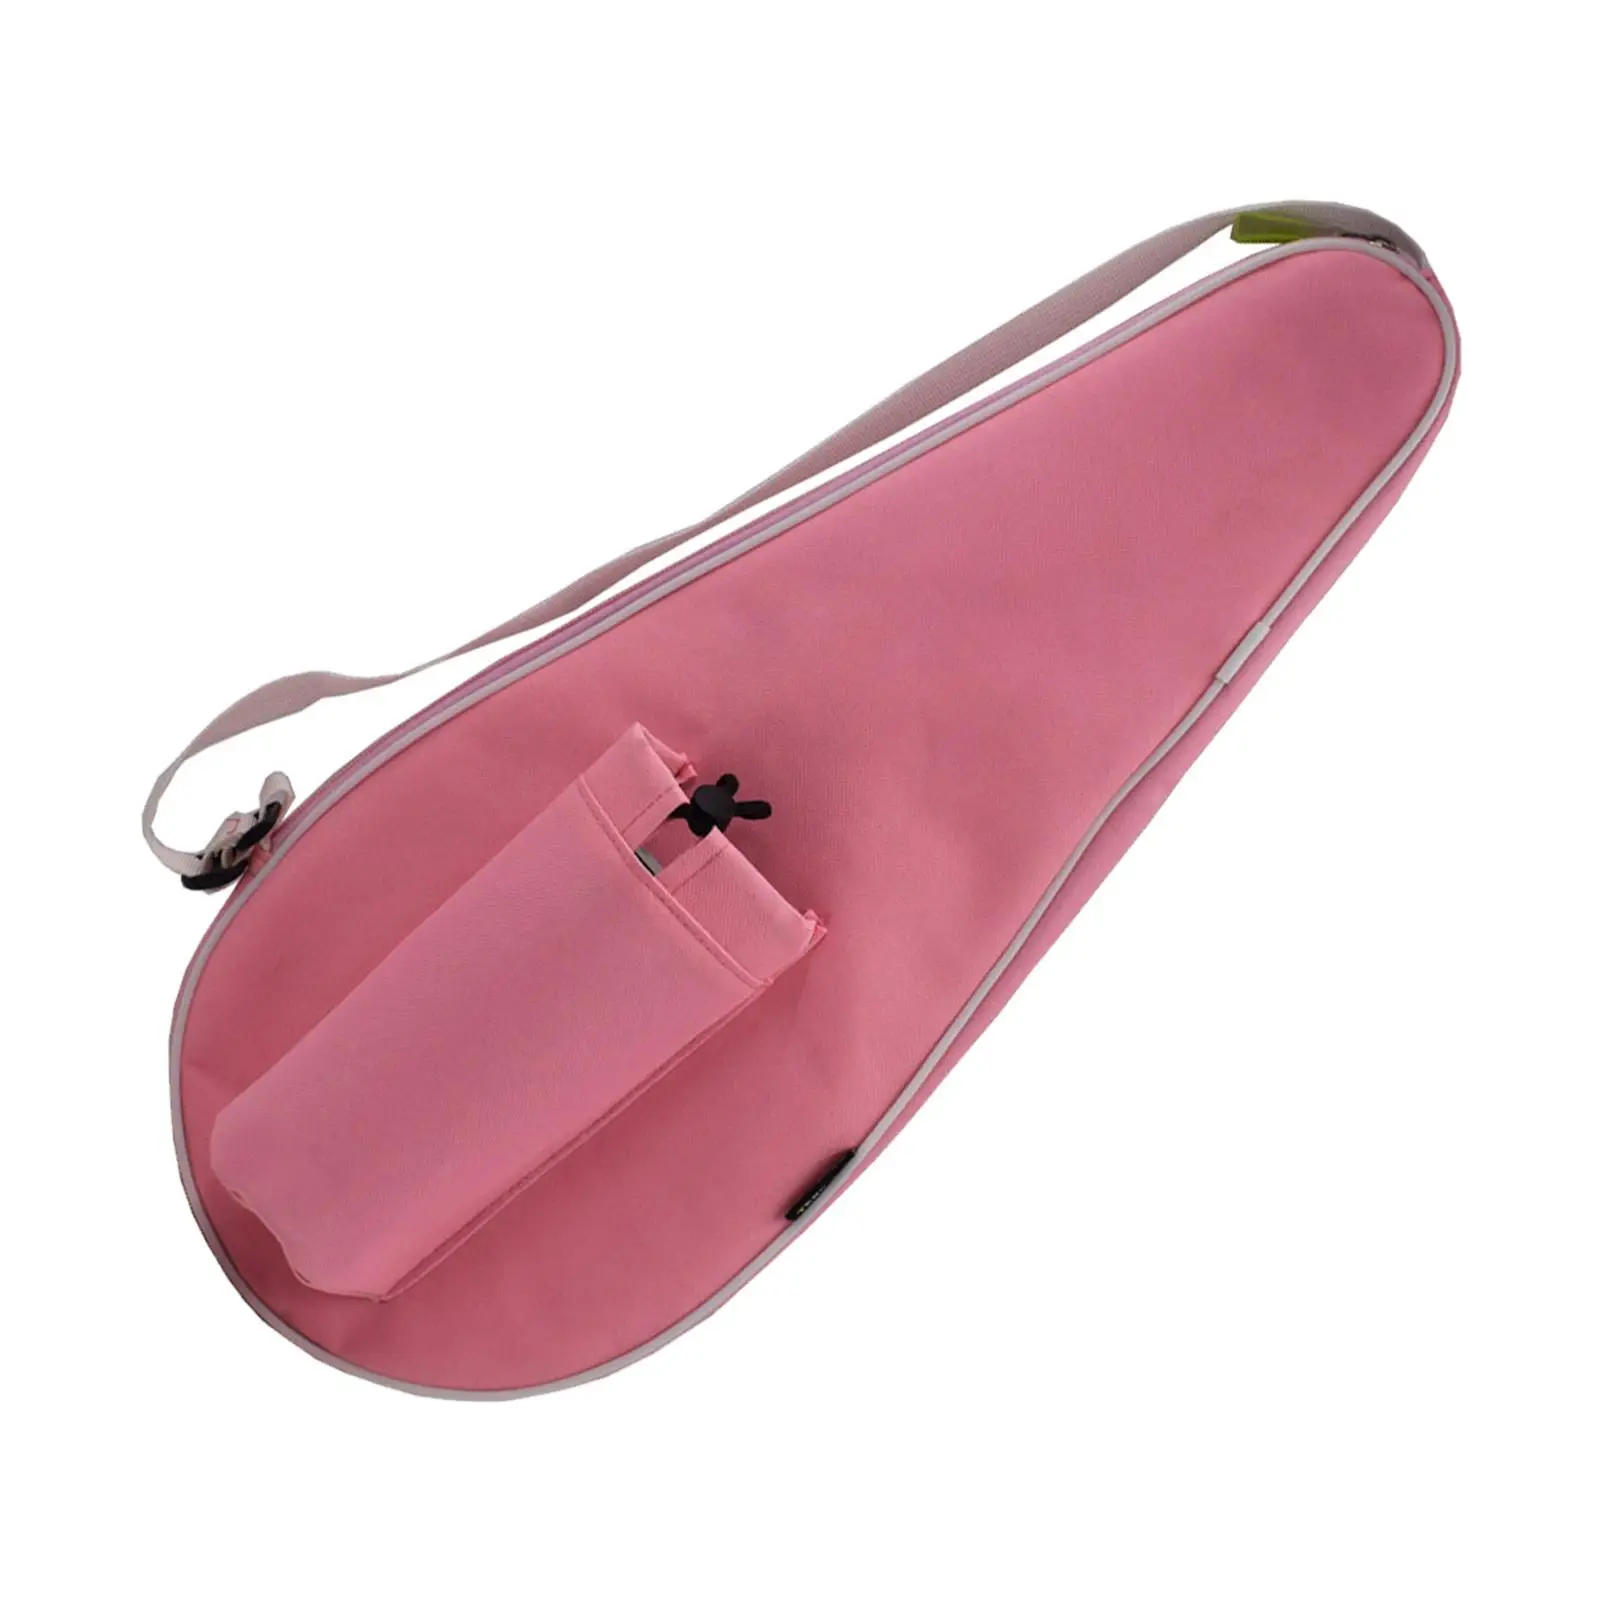 Badminton Racket Bag Waterproof Holder Case Racket Cover Dustproof Sports Bag for 3-12 Years Children Gift Pink Outdoor Sports